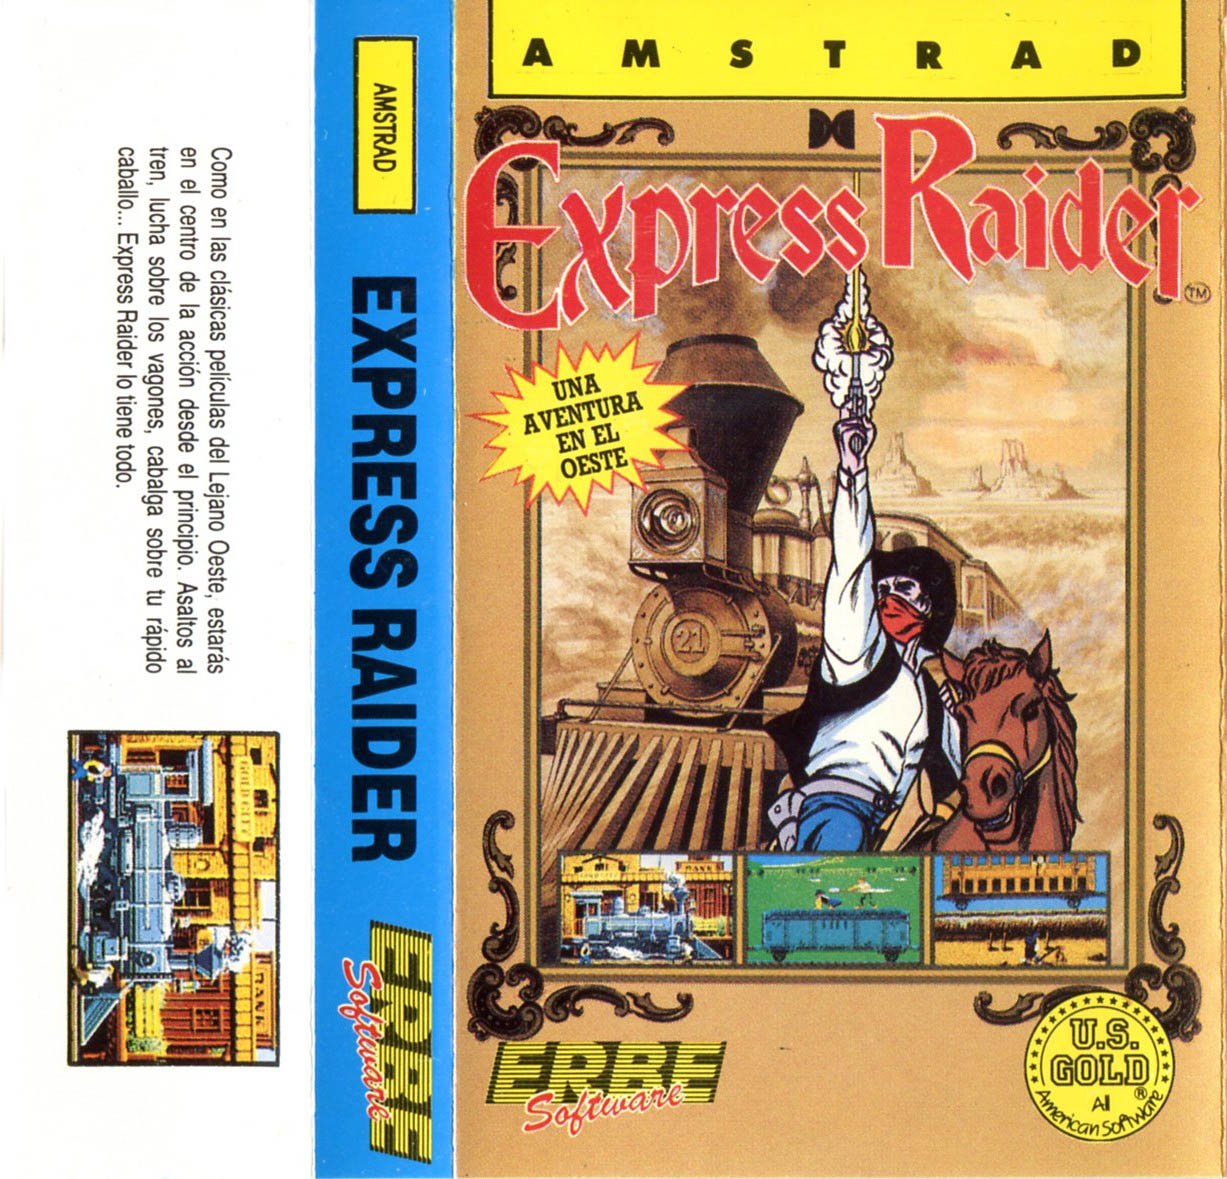 Caratula de Express Raider para Amstrad CPC